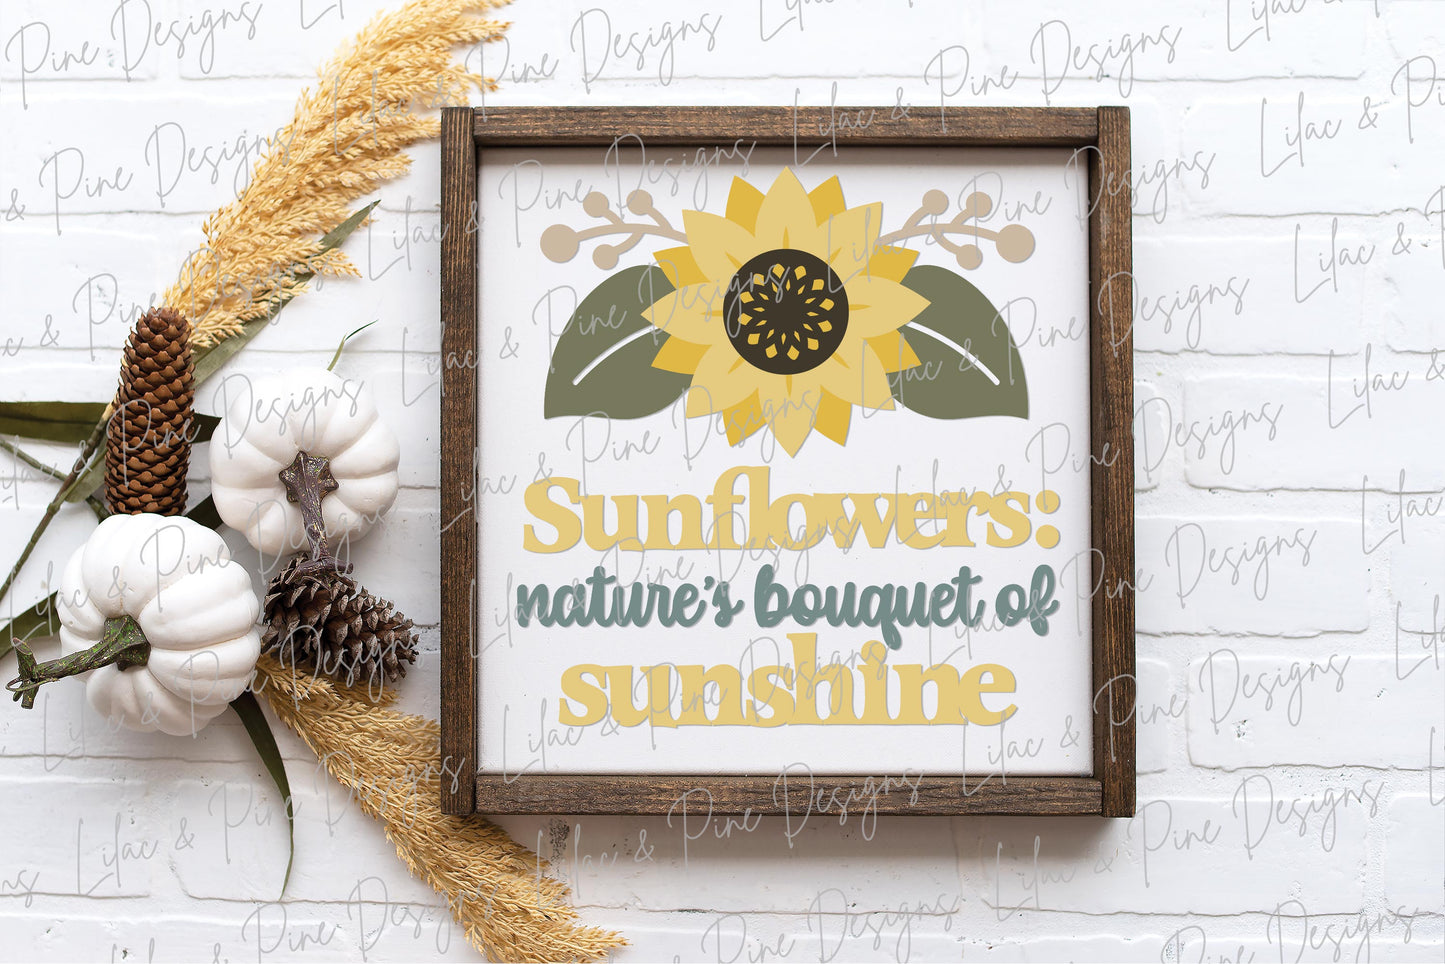 Sunflower natures bouquet of Sunshine sign, Sunflower sign SVG, Sunflower quote SVG, Sunshine quote SVG